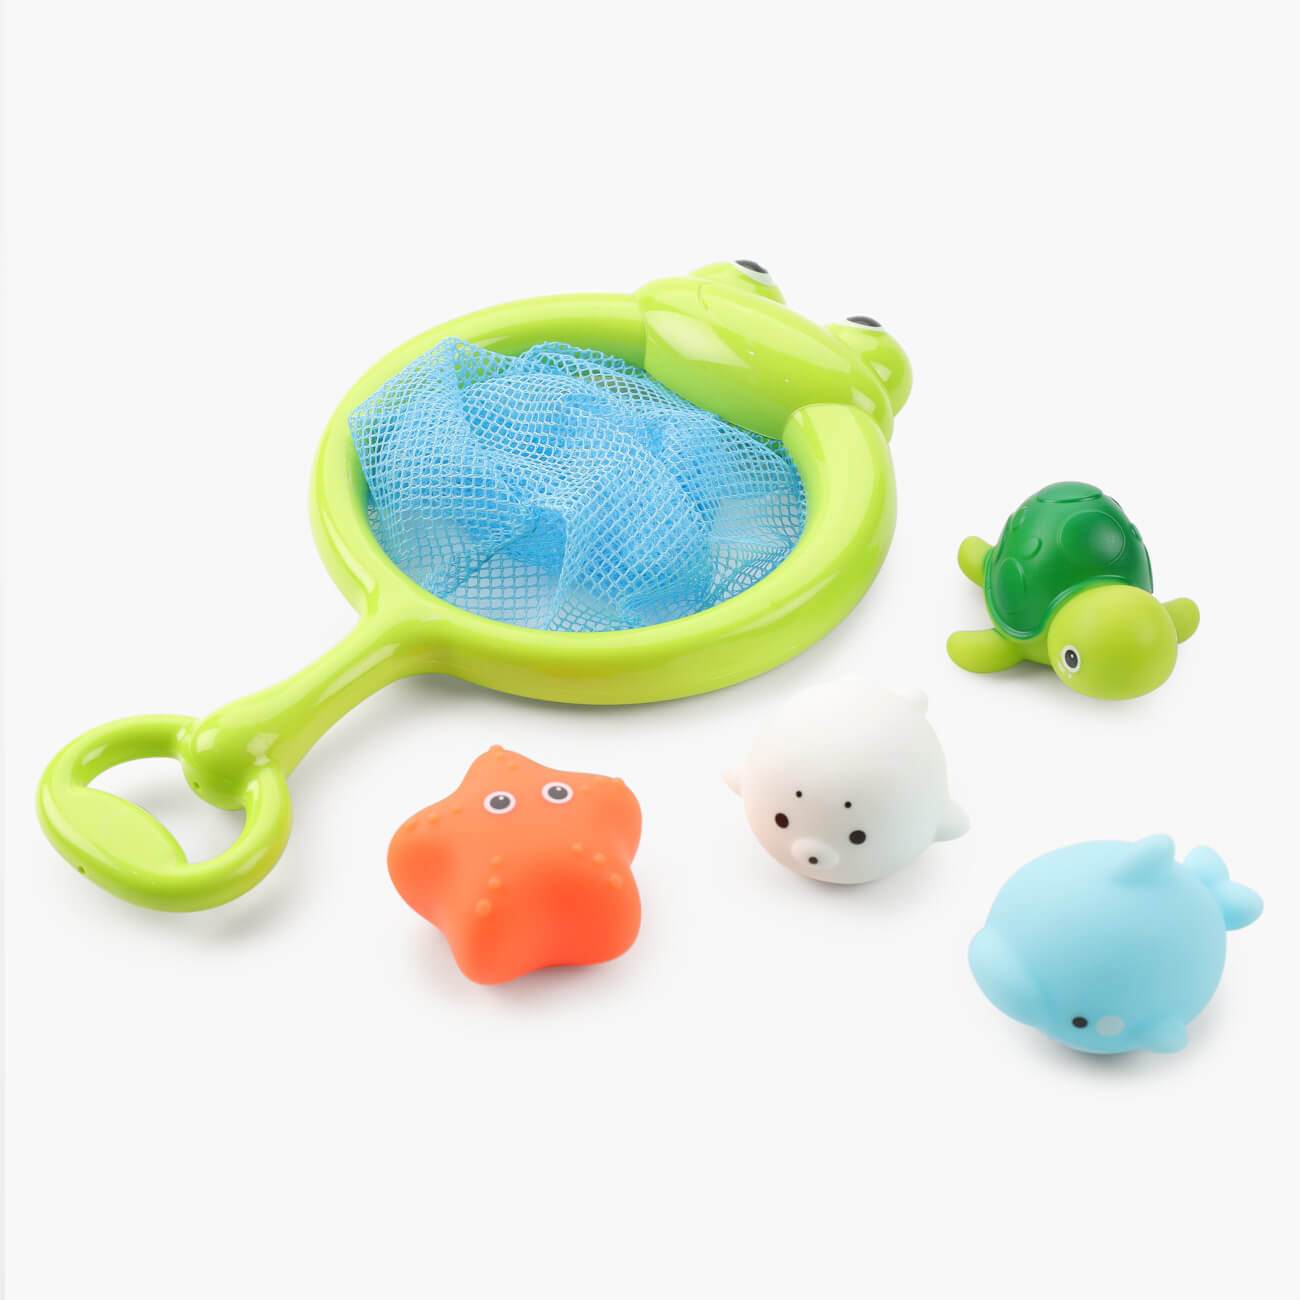 Набор игрушек для купания, 5 пр, с подсветкой, сачок/игрушки, пластик, Морские обитатели, Game скрипучие игрушки для собак dog chew toy